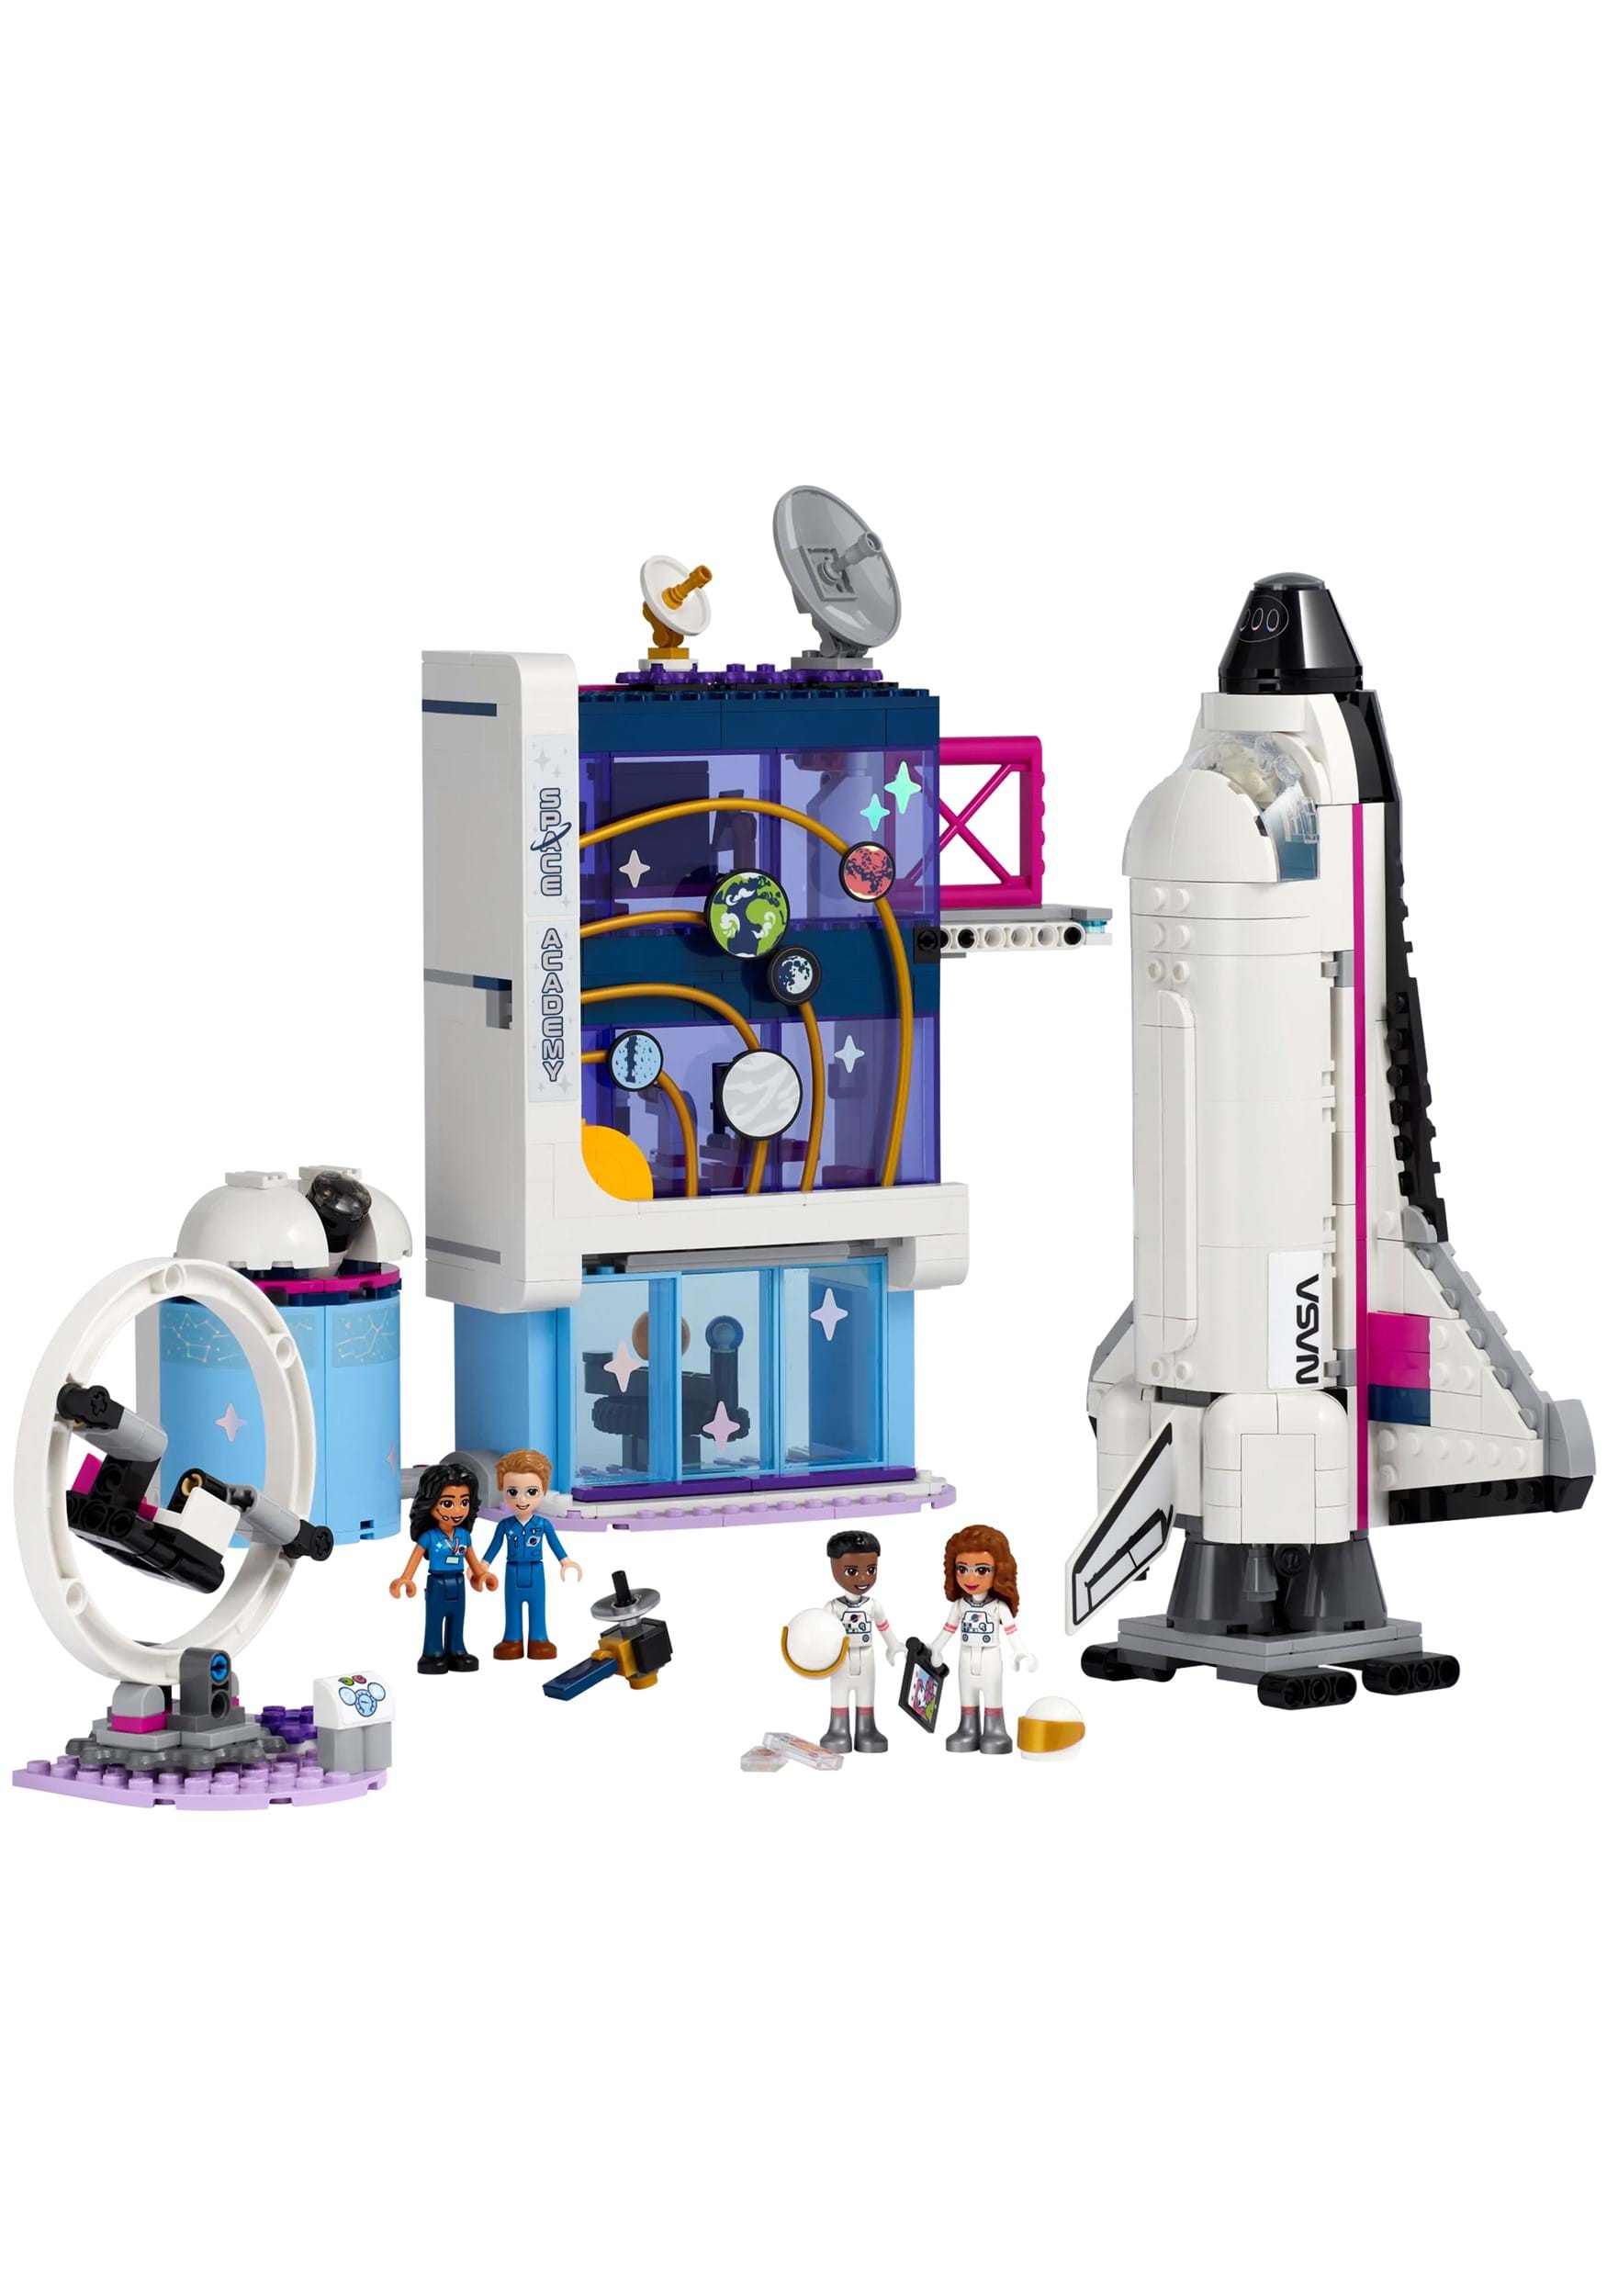 LEGO Friends Olivias Space Academy Playset